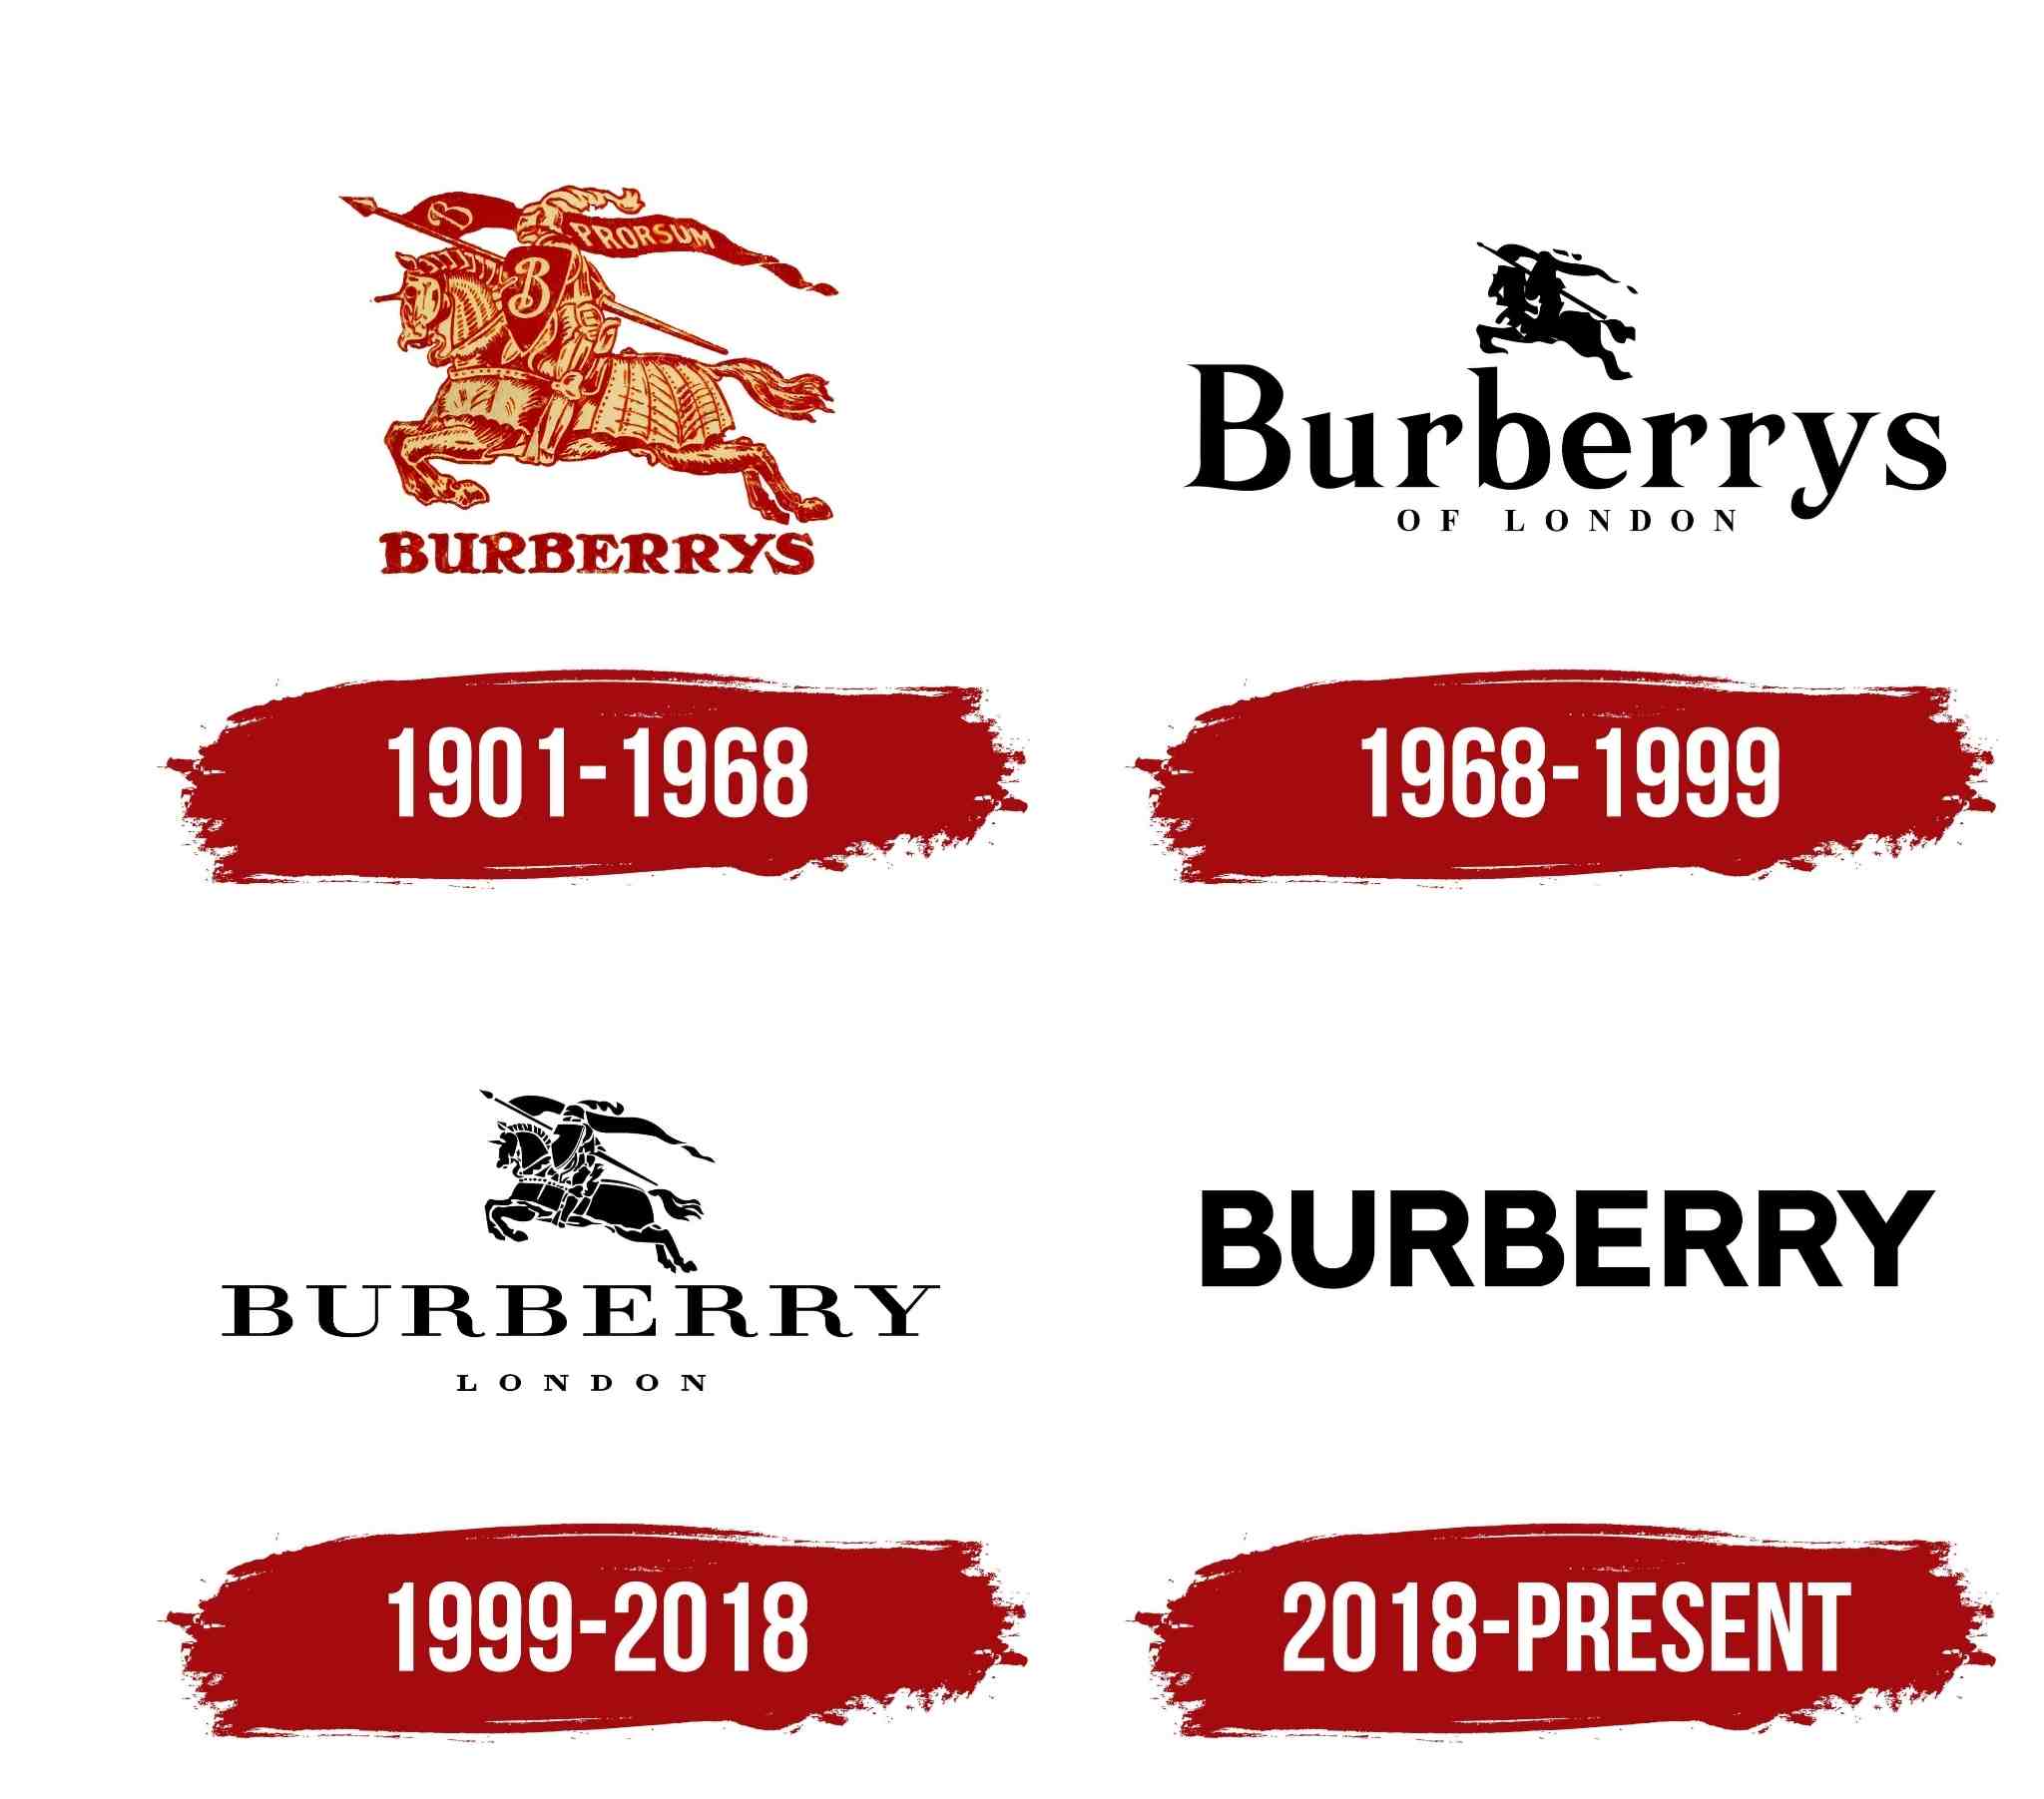 BURBERRY LOGO: An Iconic Brand